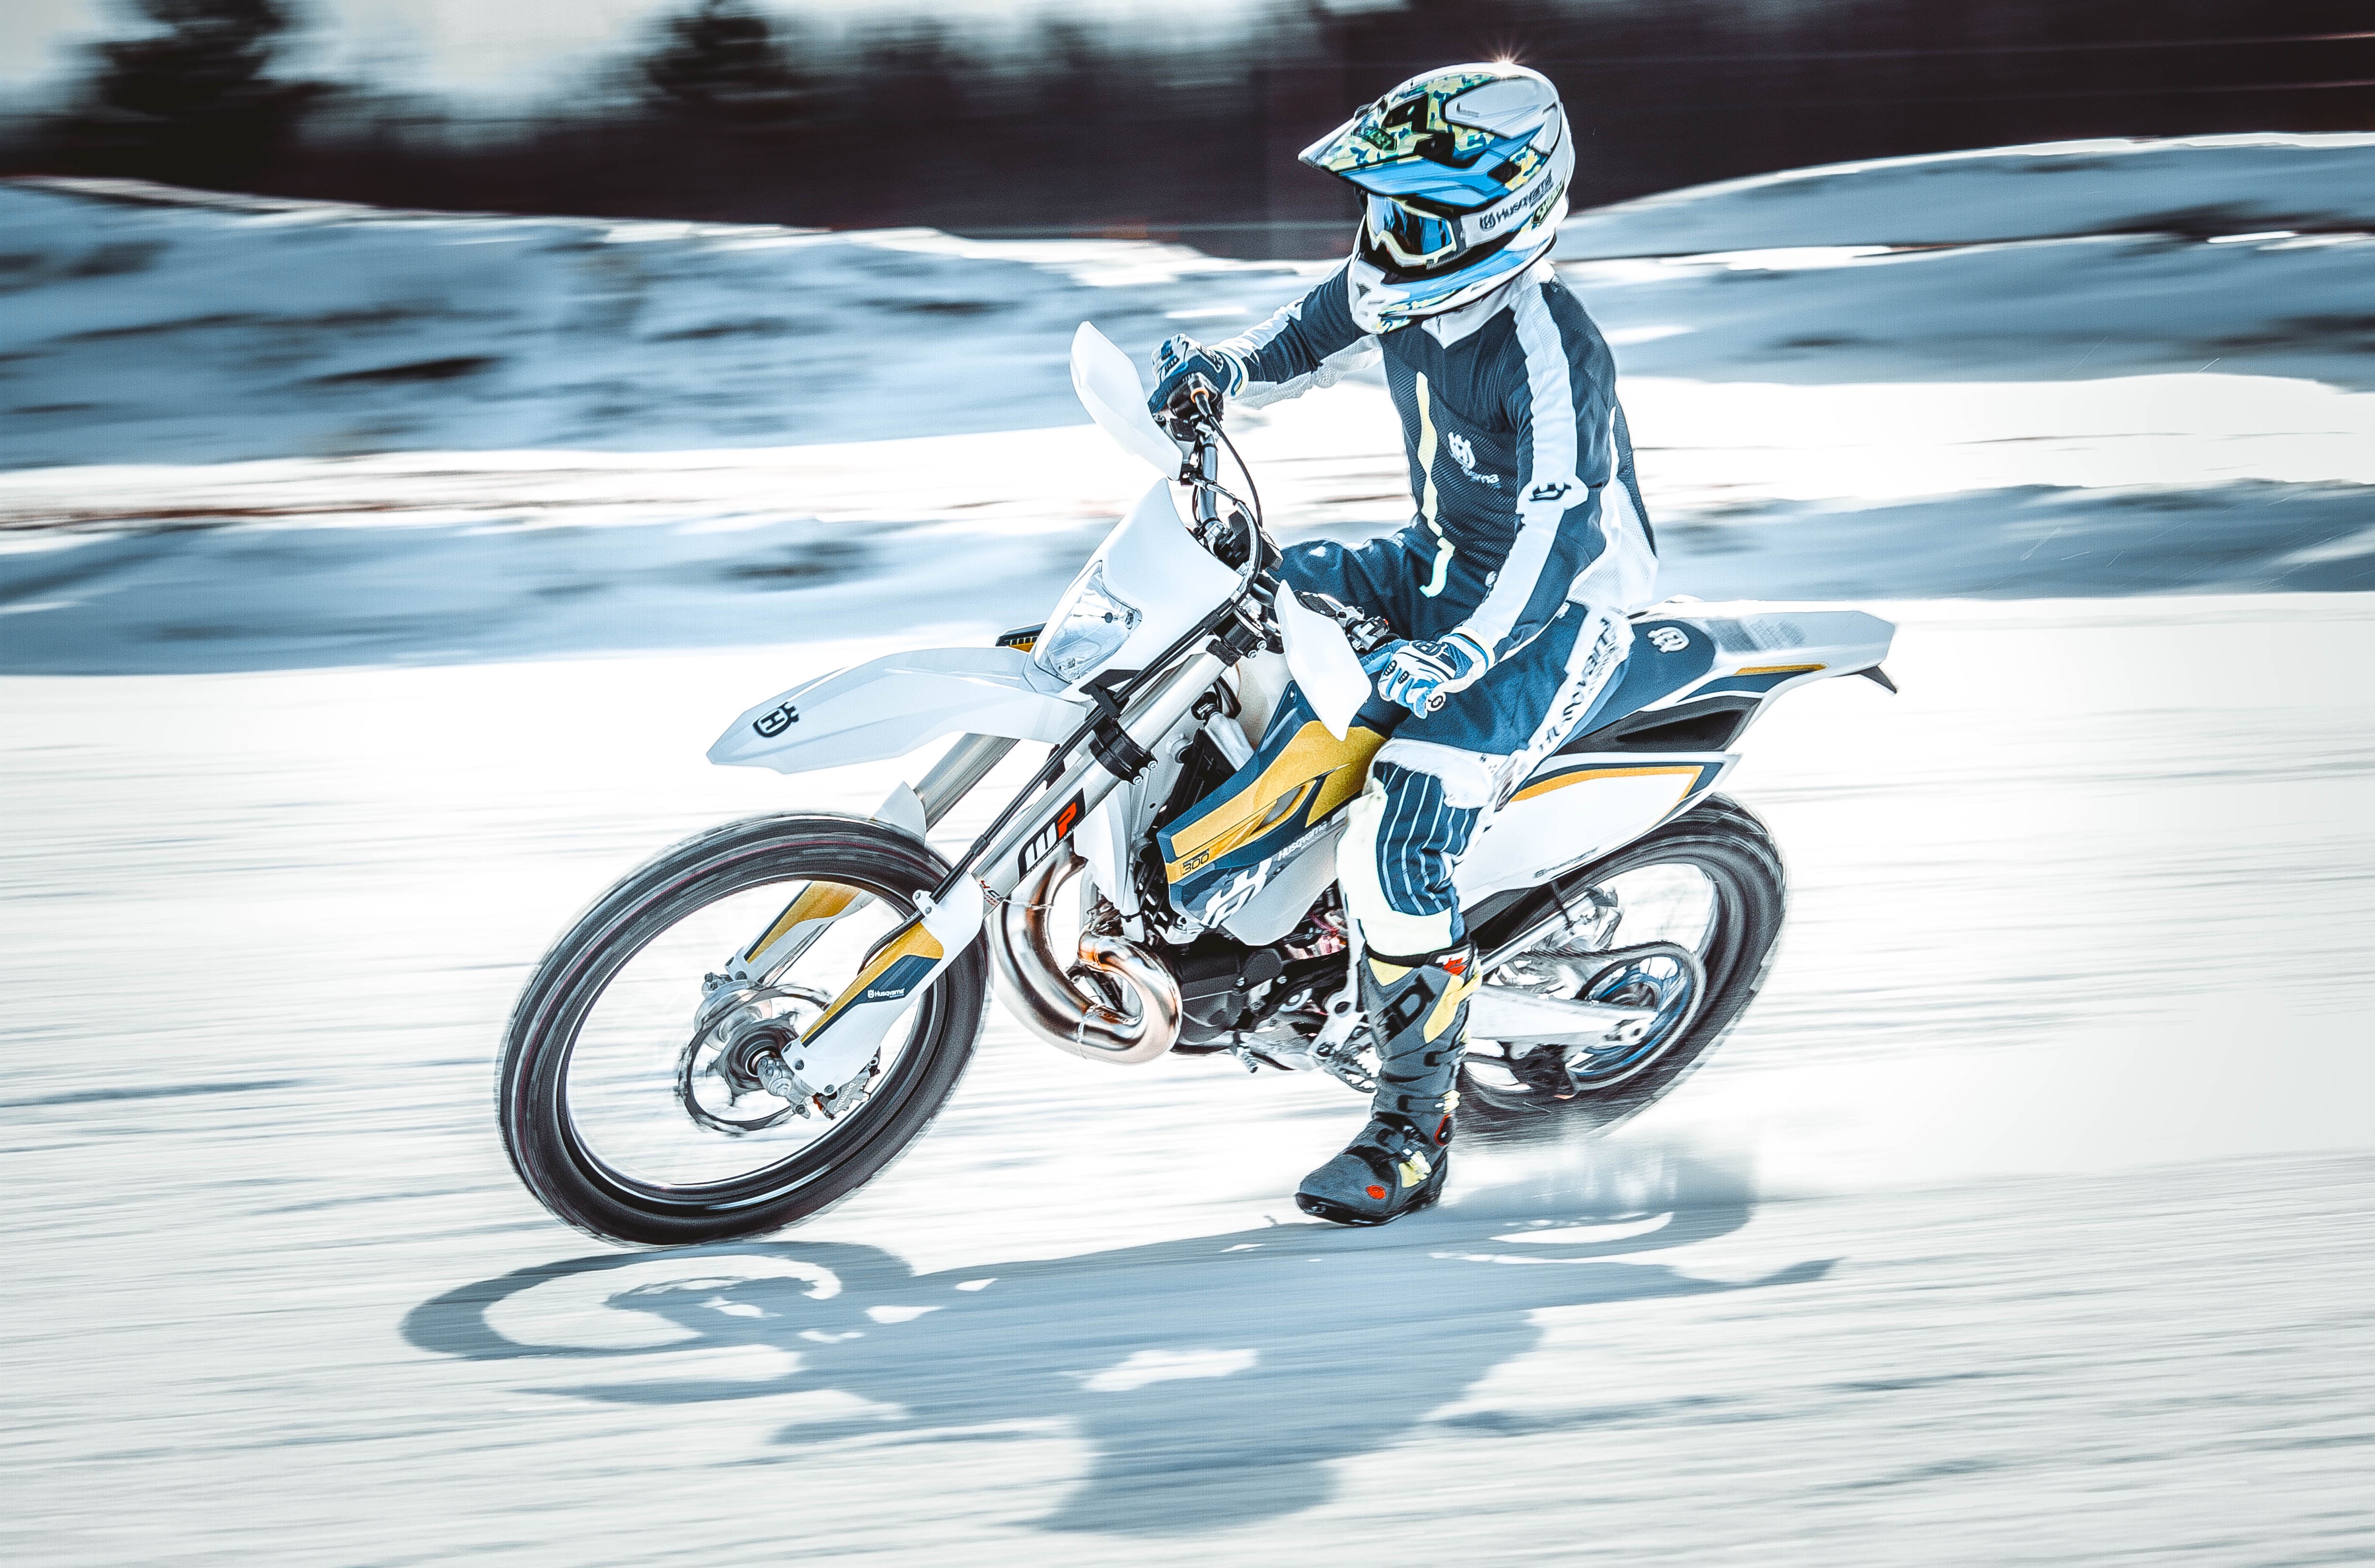 snow, motorcycles, motorcyclist, speed Desktop home screen Wallpaper